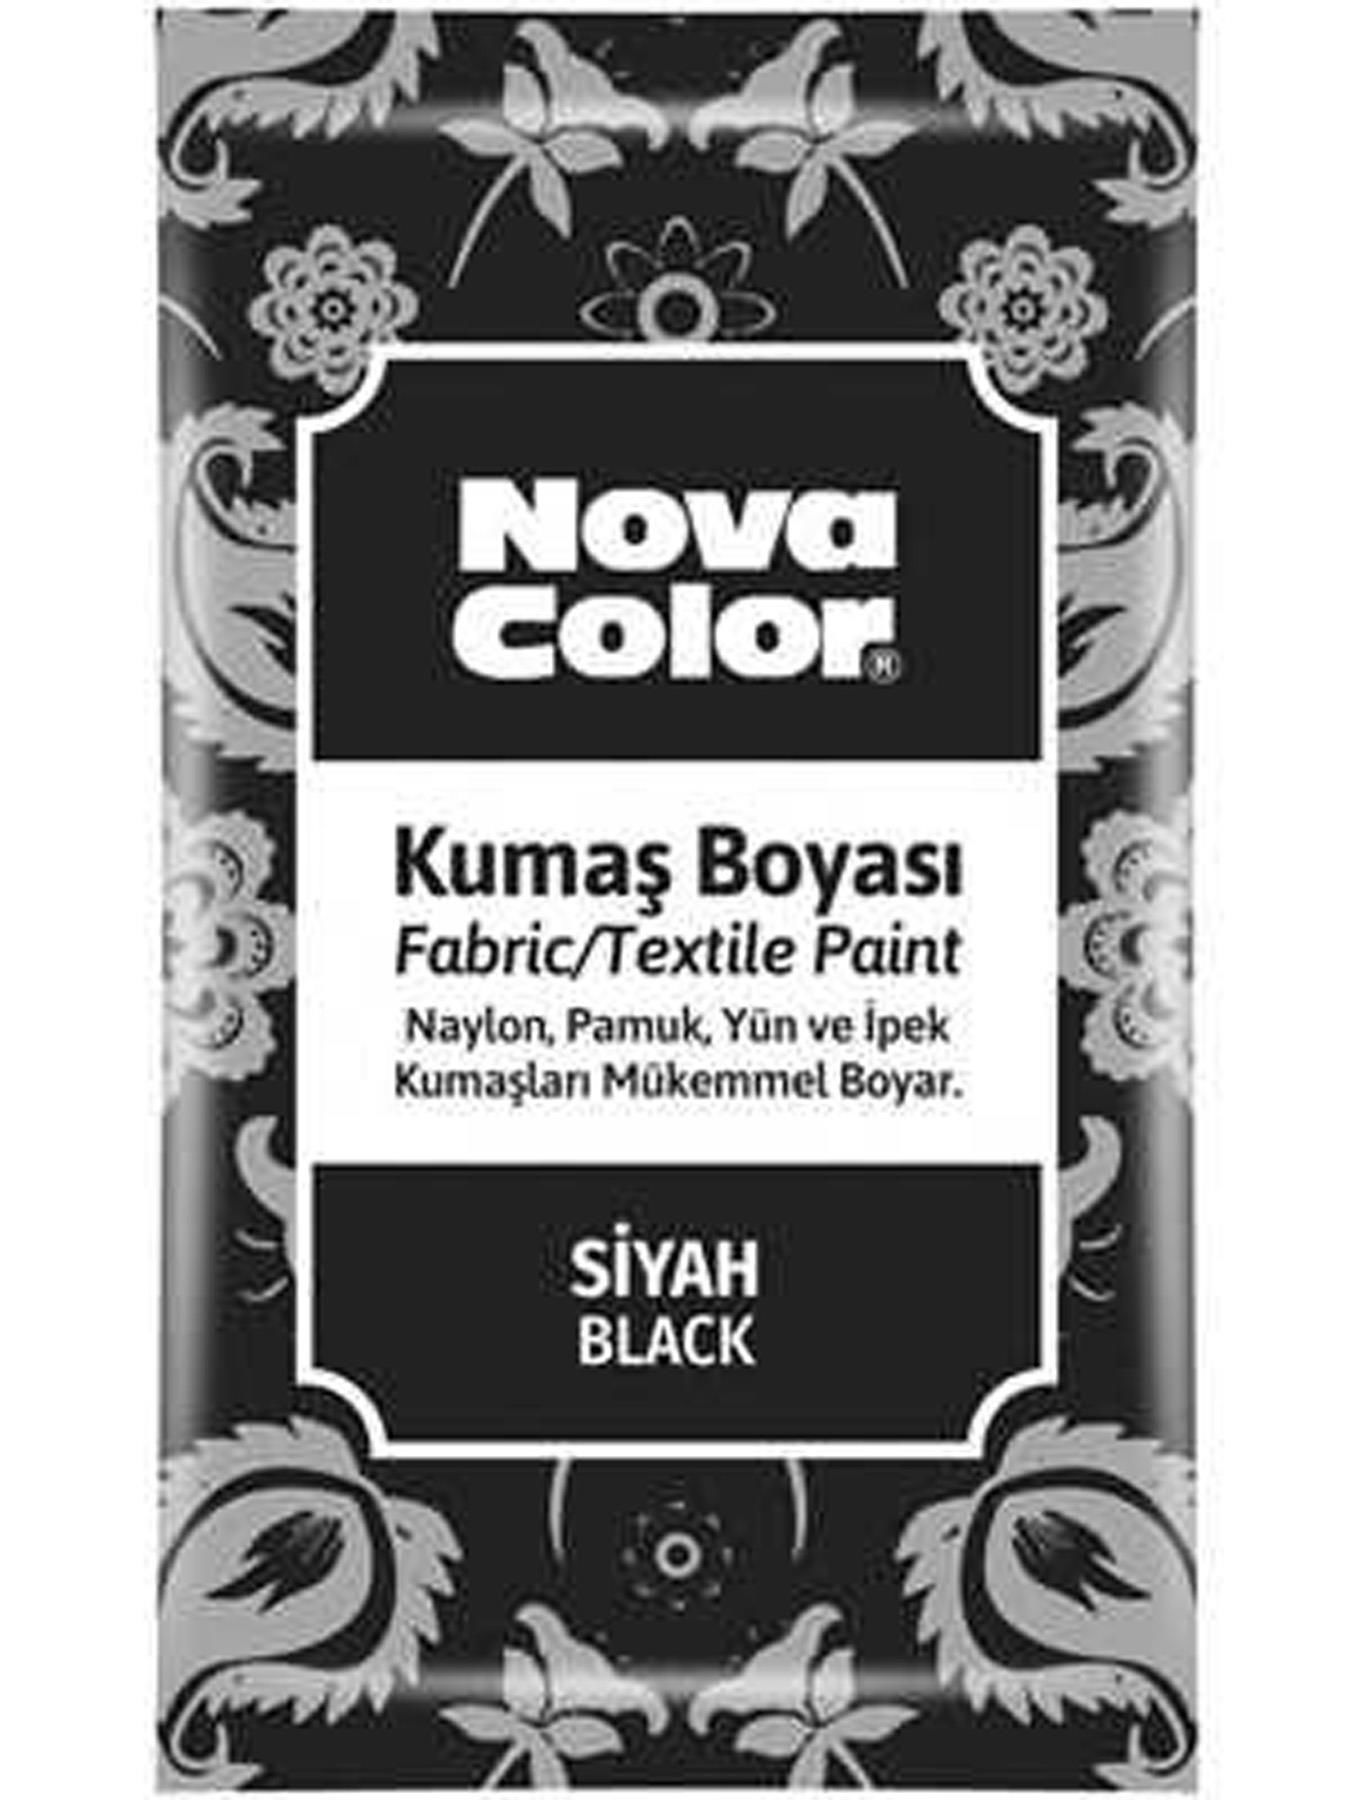 Nova Color Toz Kumaş Boyası 12gr Nc-904 (1 adet)